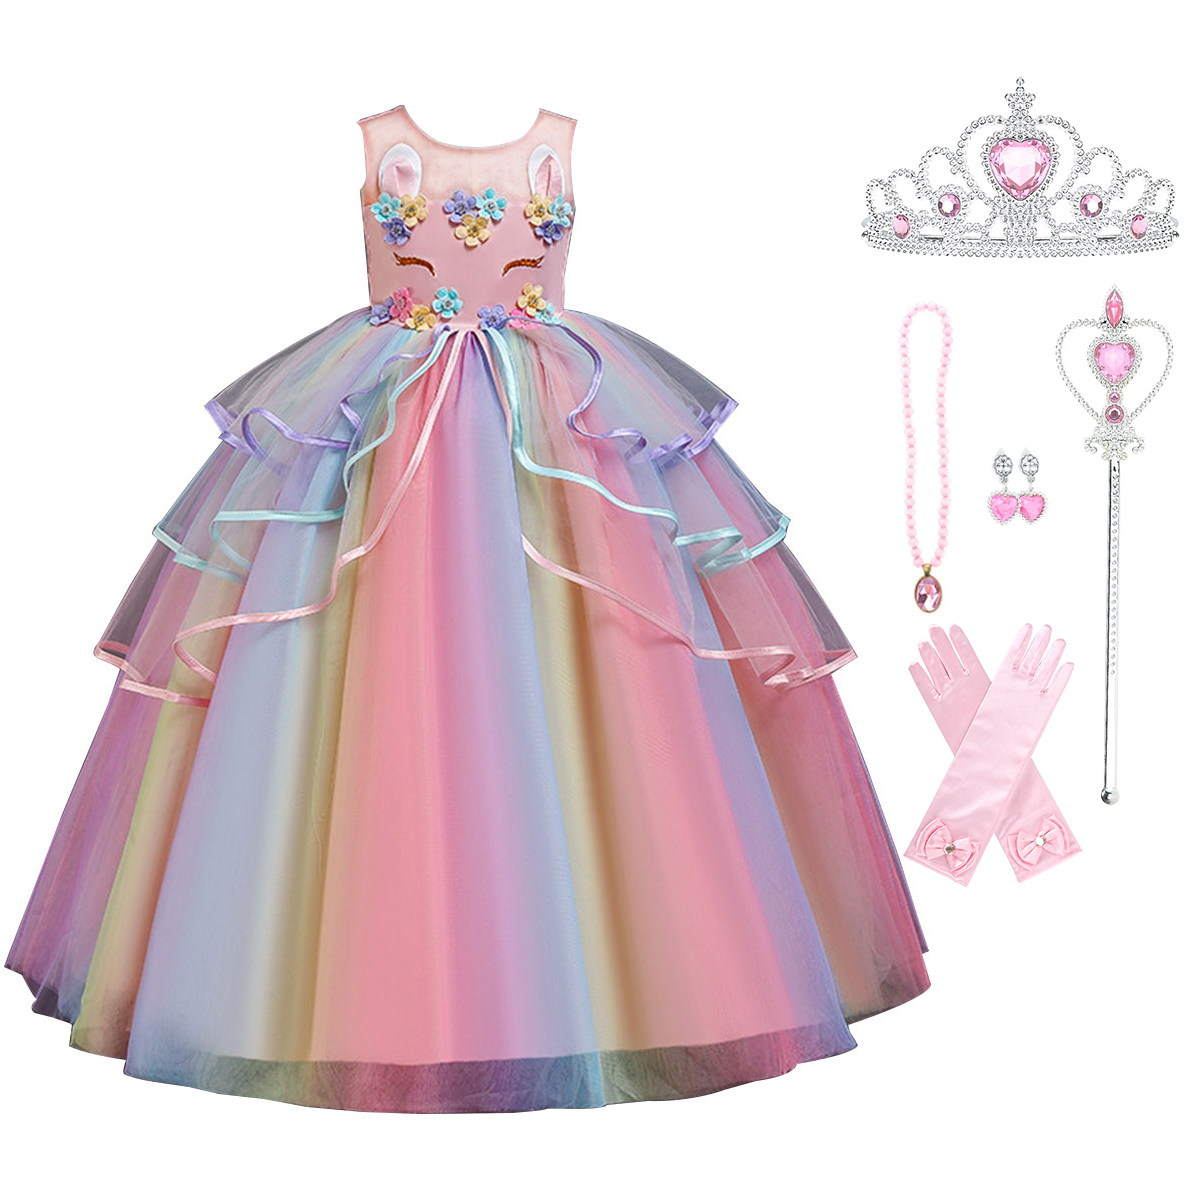 Hawee Flower Girls Sequin Dress Rainbow Tutu Birthday Party Princess